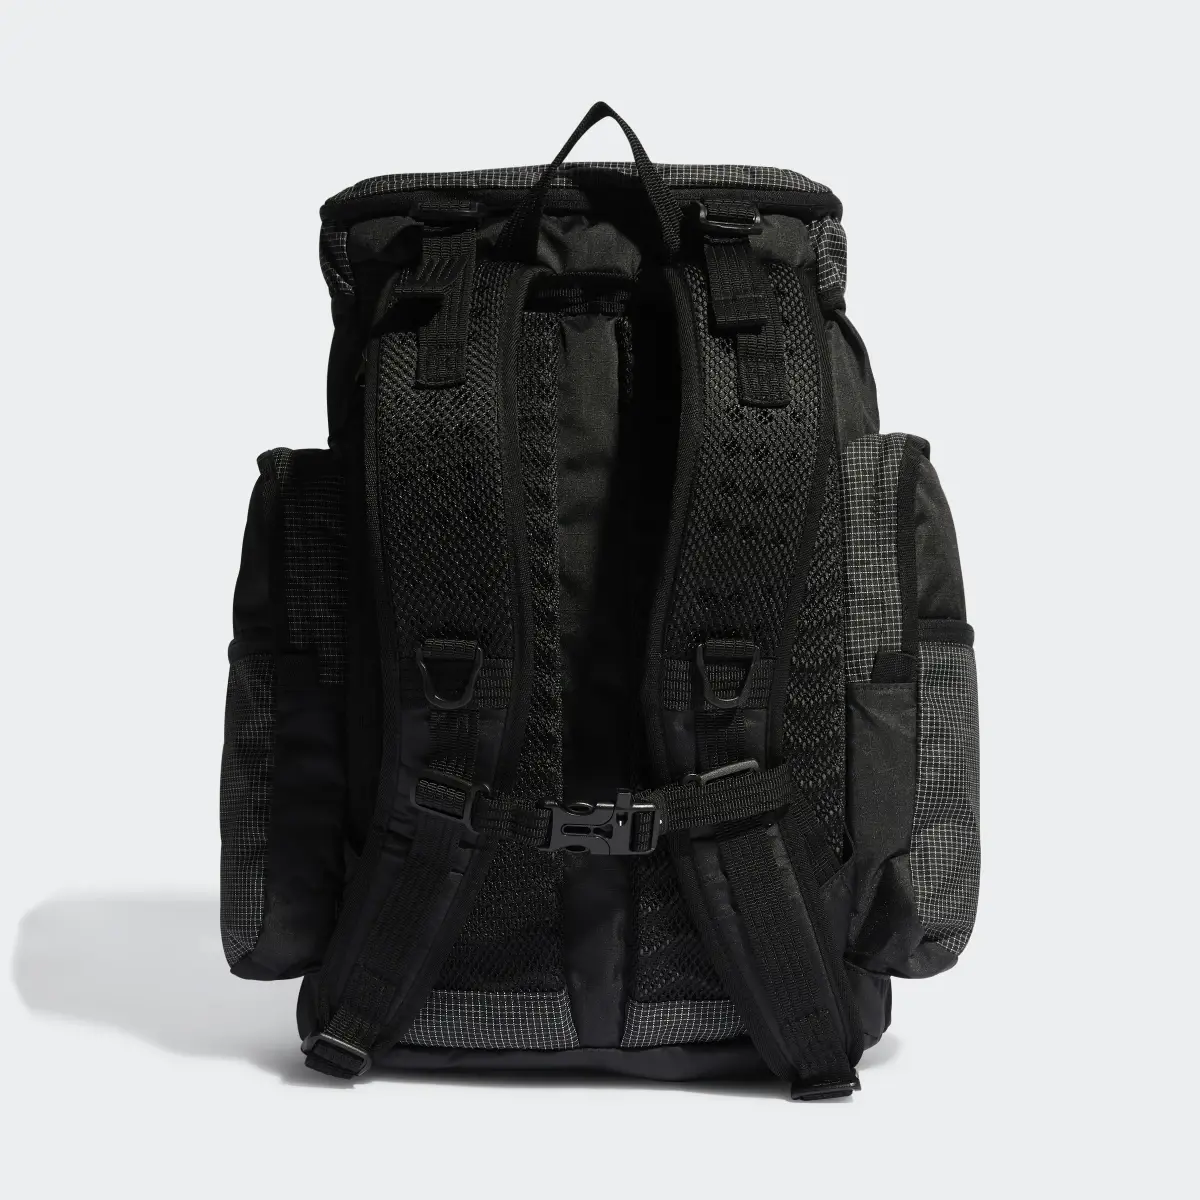 Adidas Adventure Toploader Backpack. 3